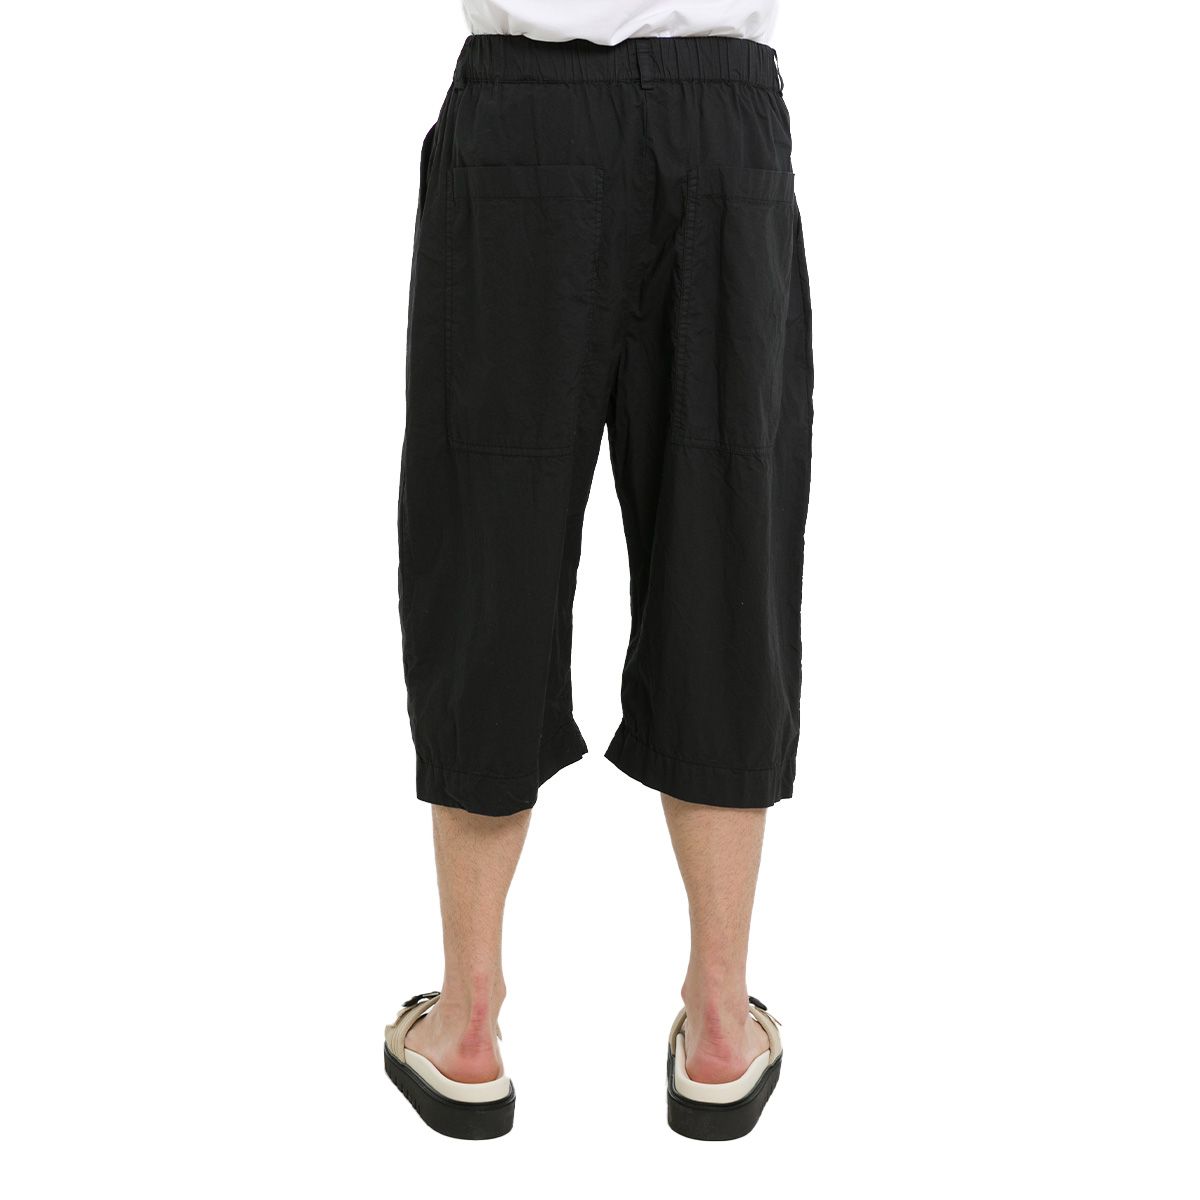 Coolio Bermuda Shorts/Black